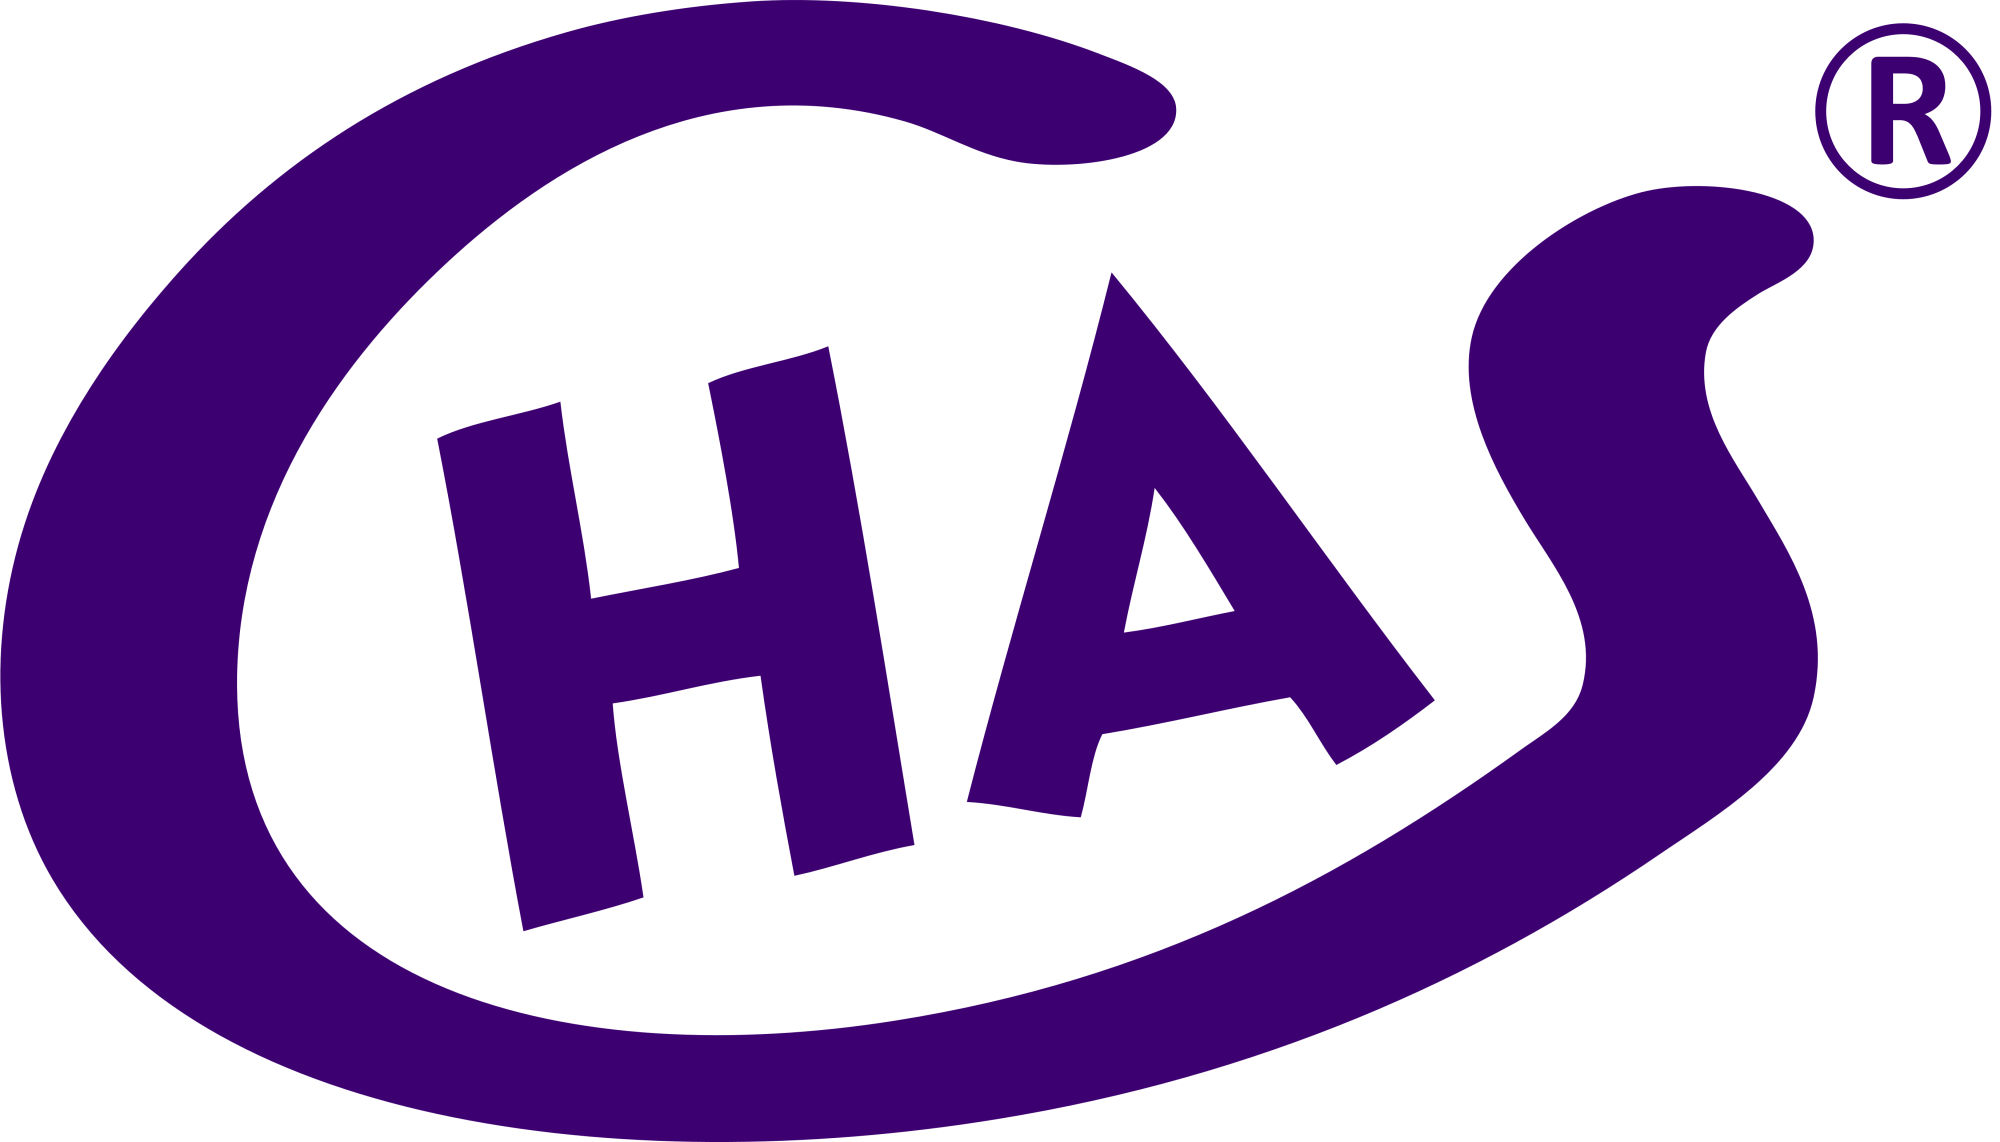 CHAS_logo